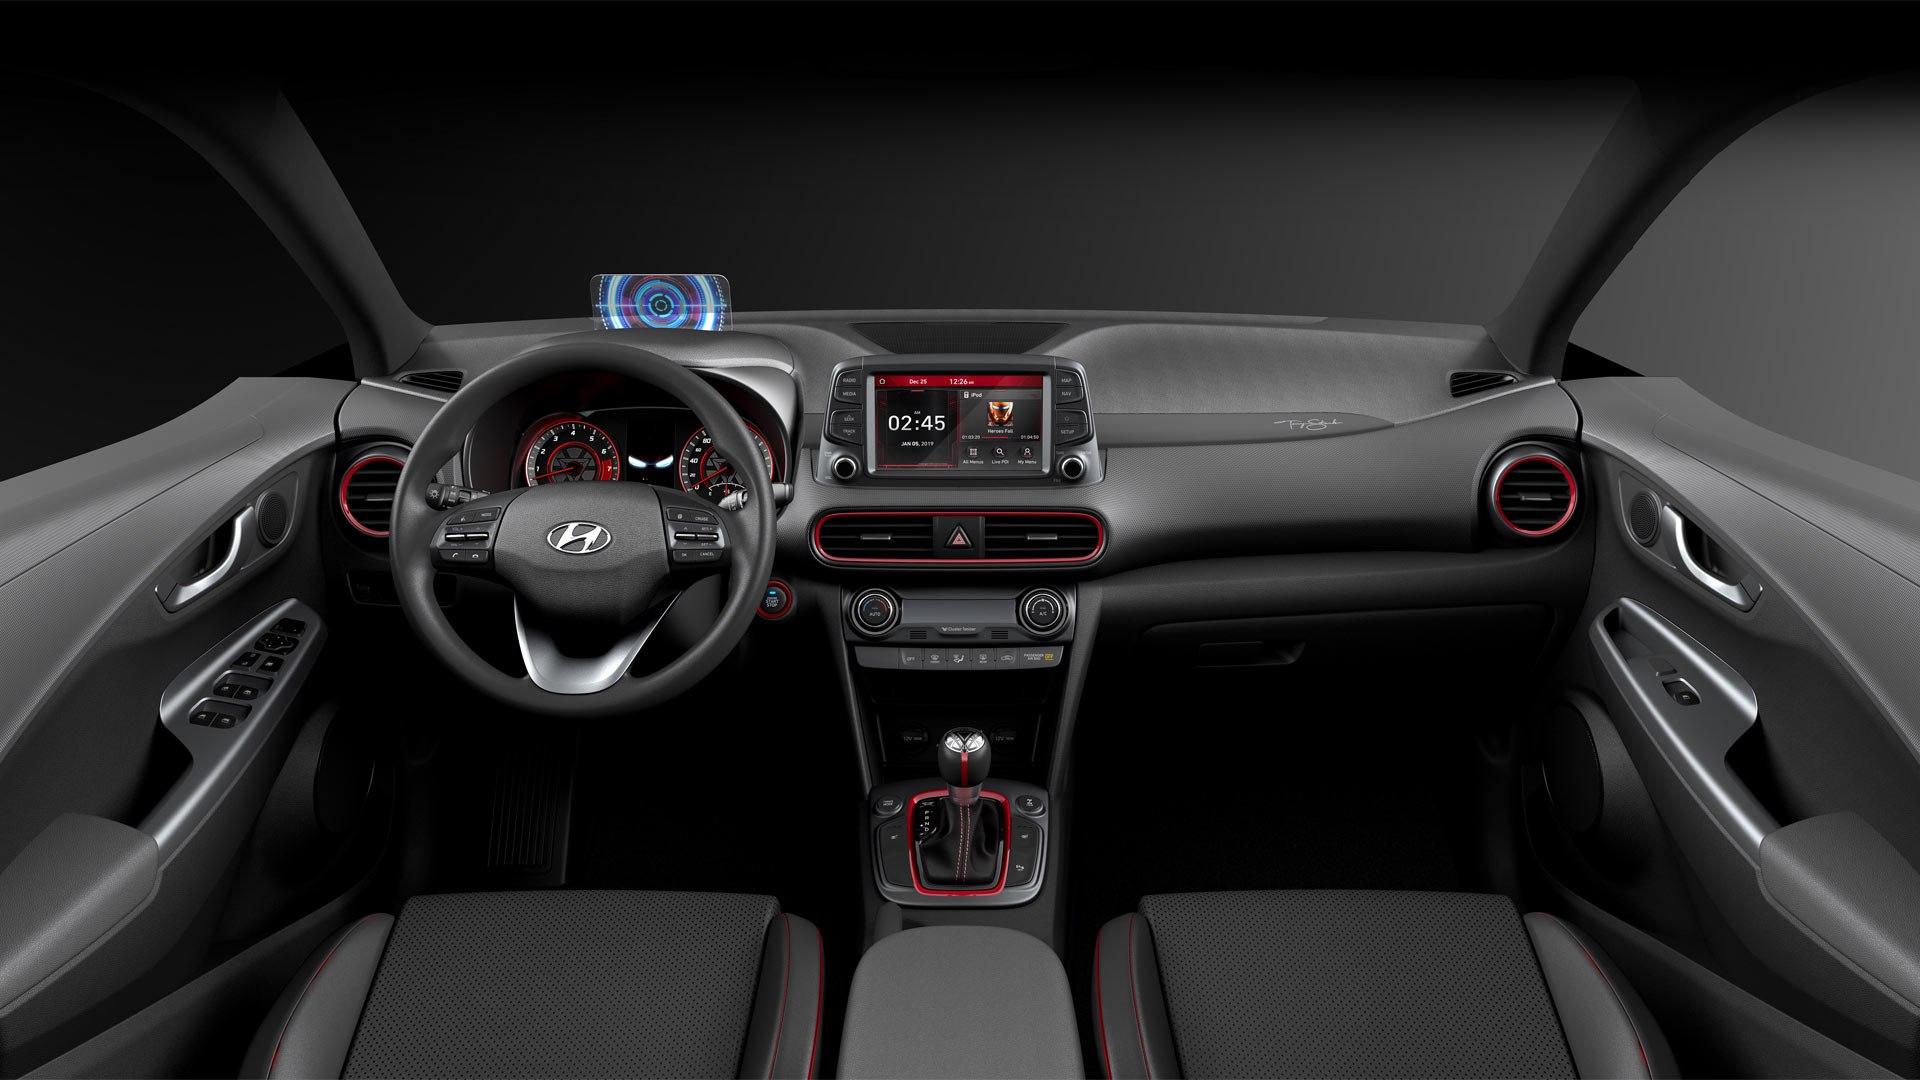 Hyundai-Kona-Iron-Man-Edition-Interior